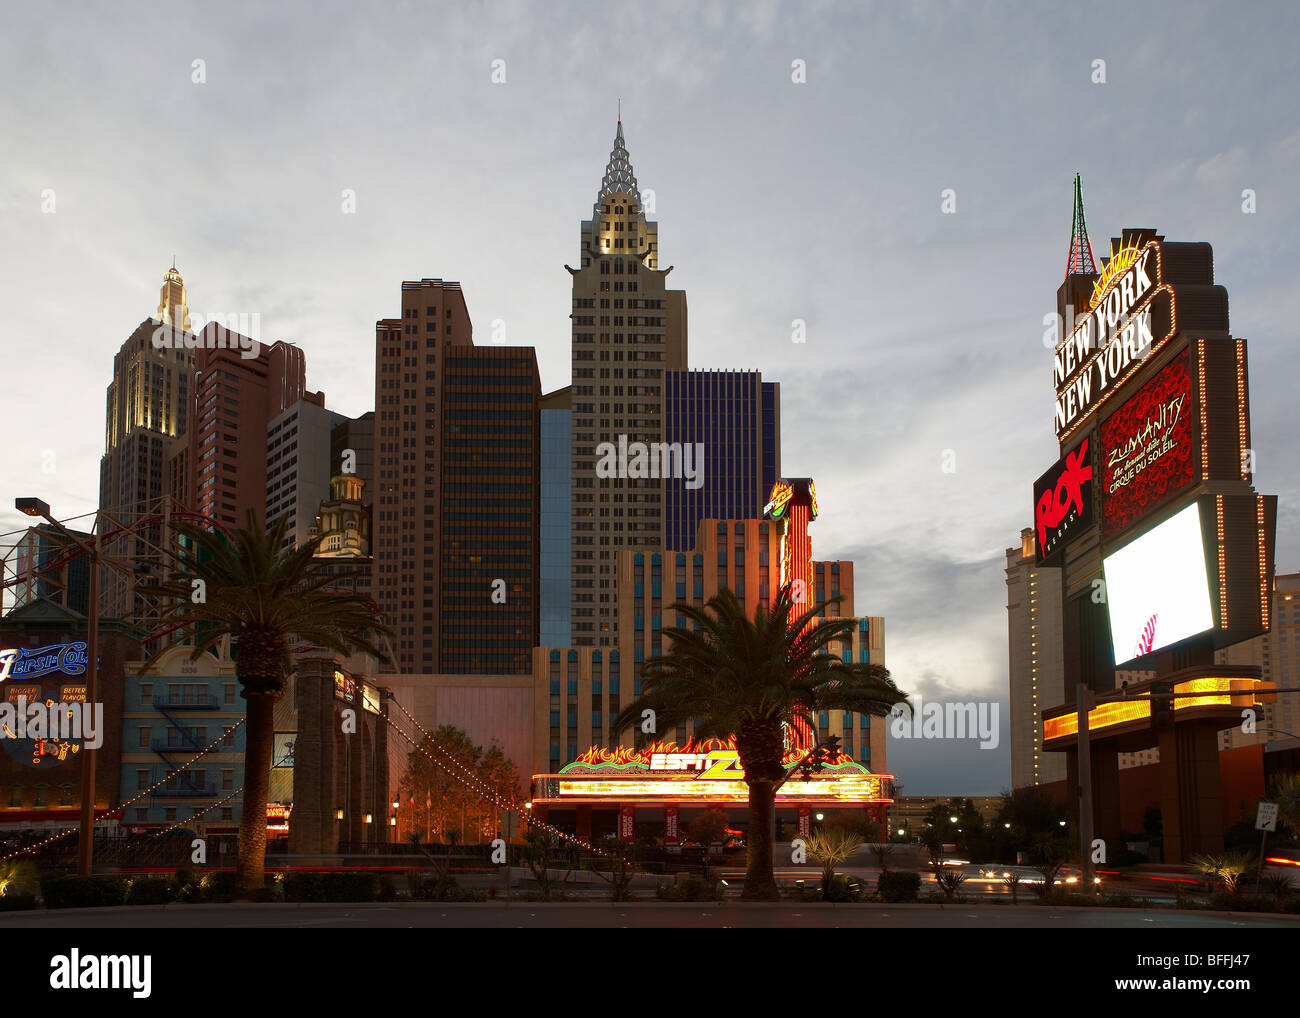 New York Hotel and Casino - The Strip - Las Vegas Stock Photo